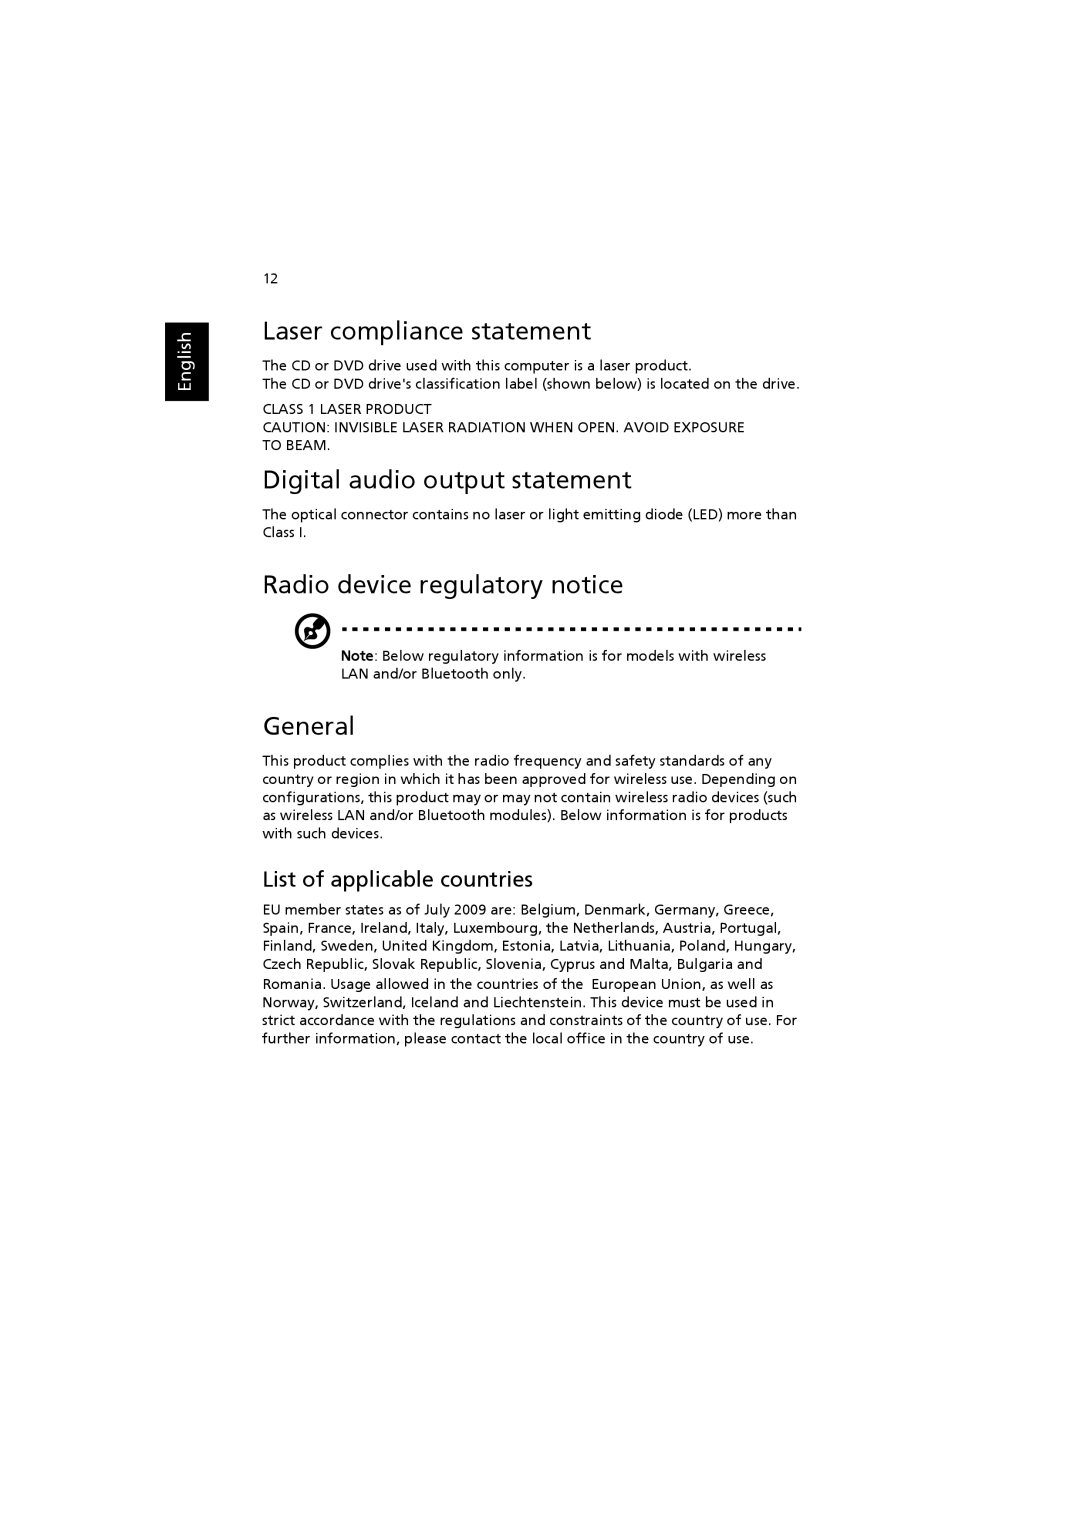 Acer AS001 Laser compliance statement, Digital audio output statement, Radio device regulatory notice, General, English 